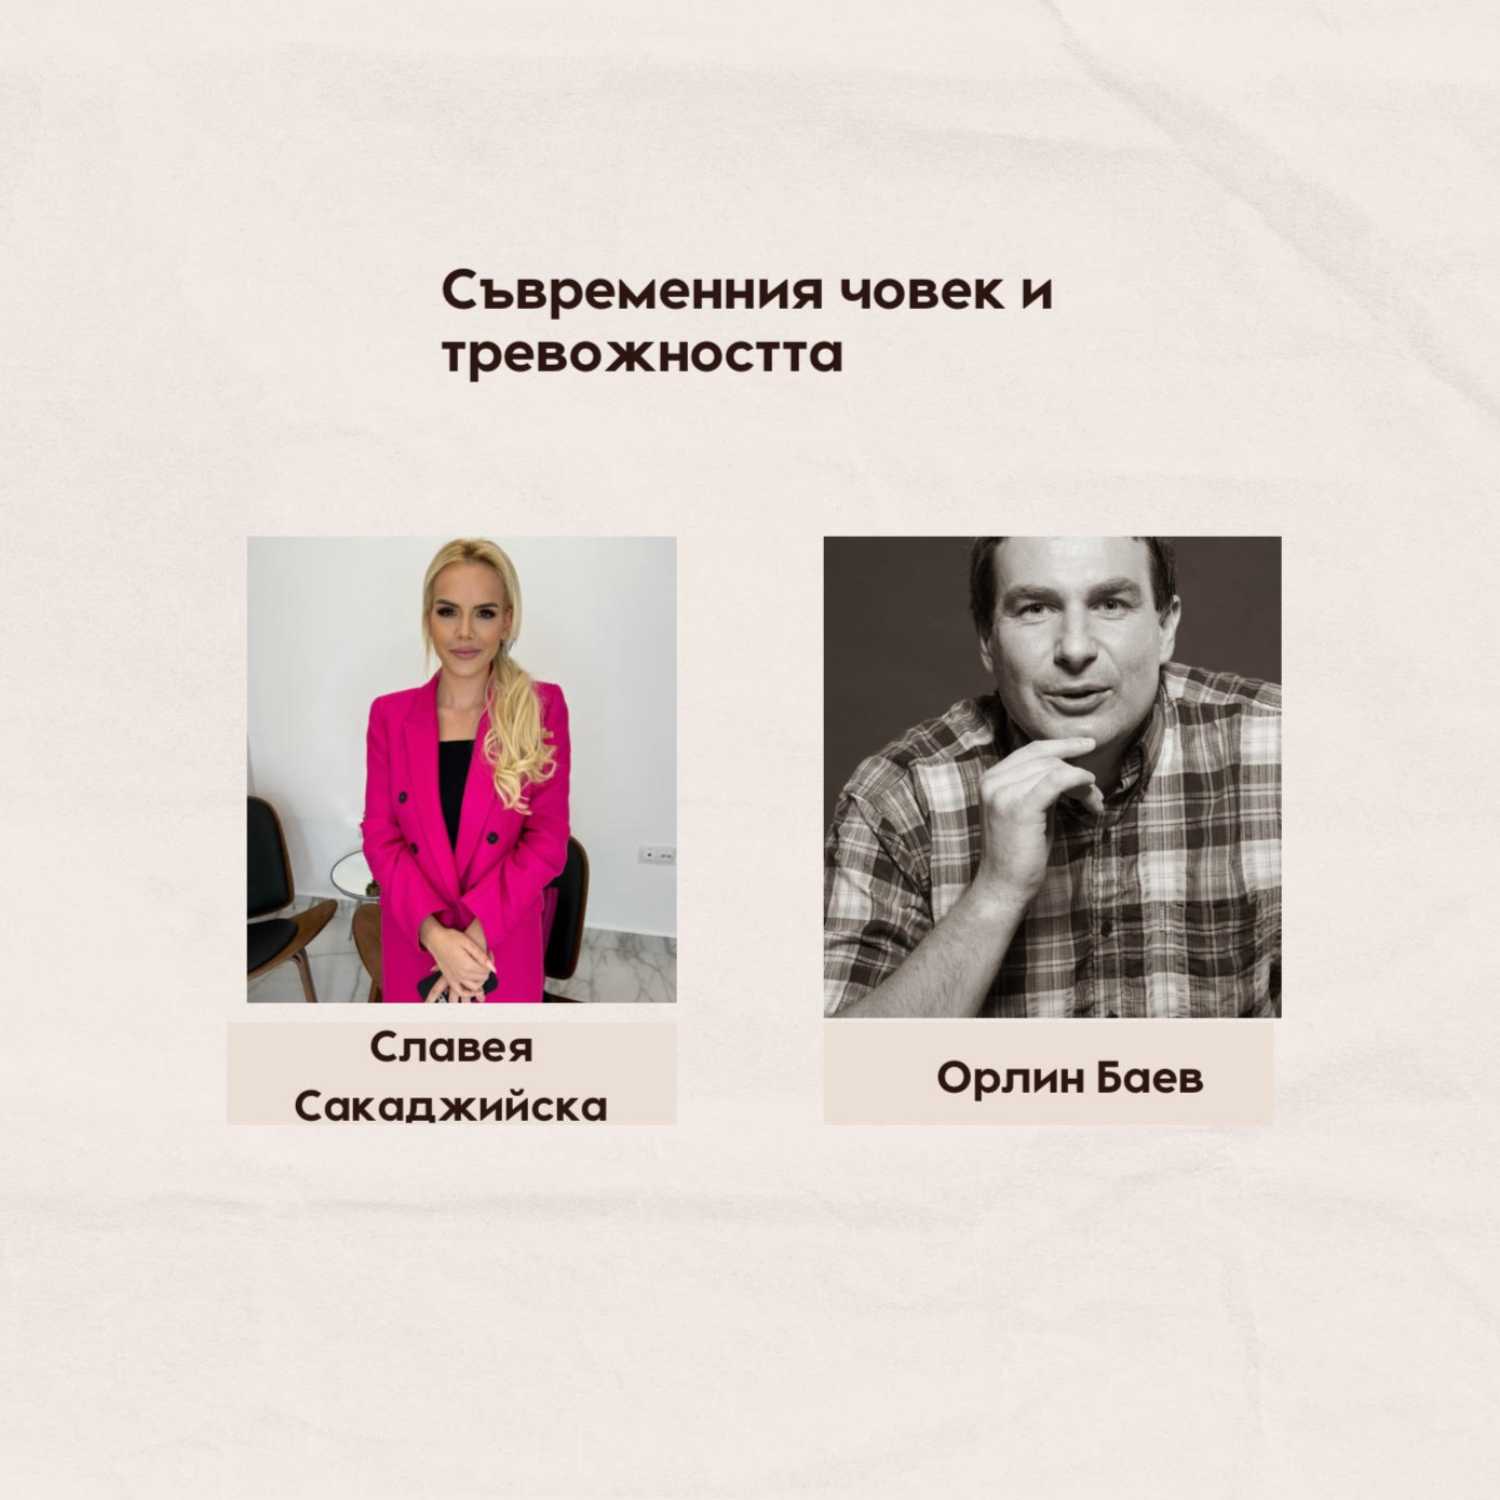 Съвременния човек и тревожността с Орлин Баев